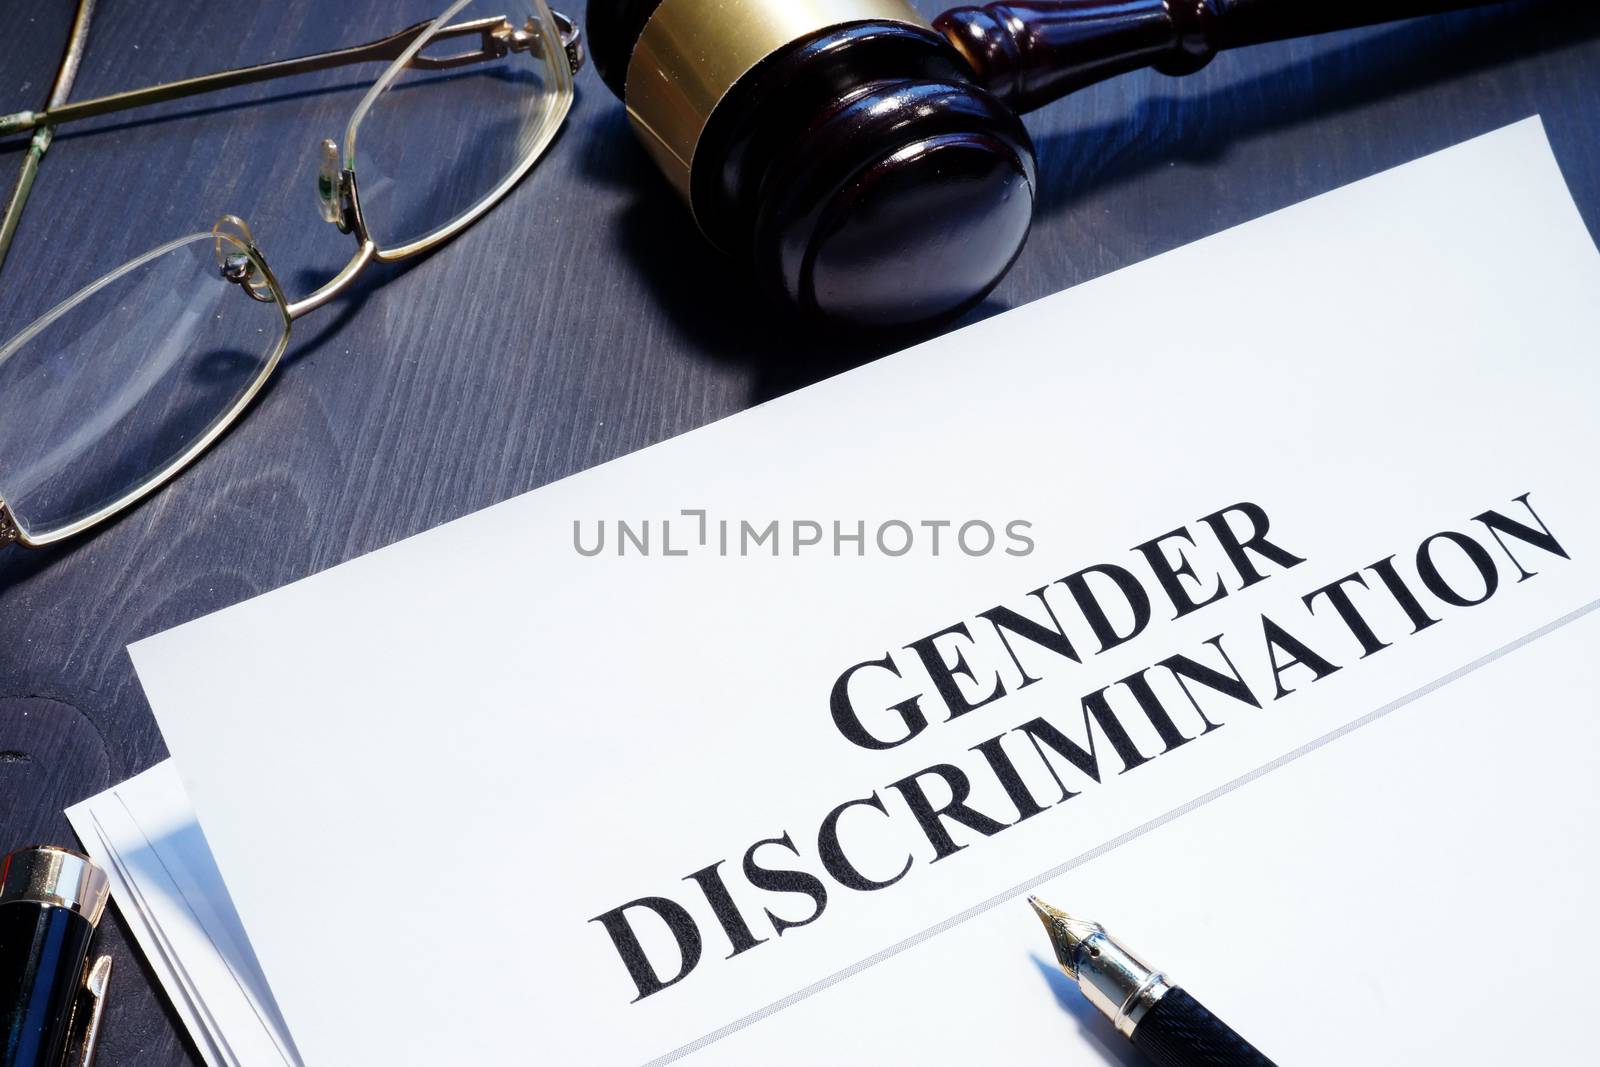 Document about Gender Discrimination and gavel on a desk.